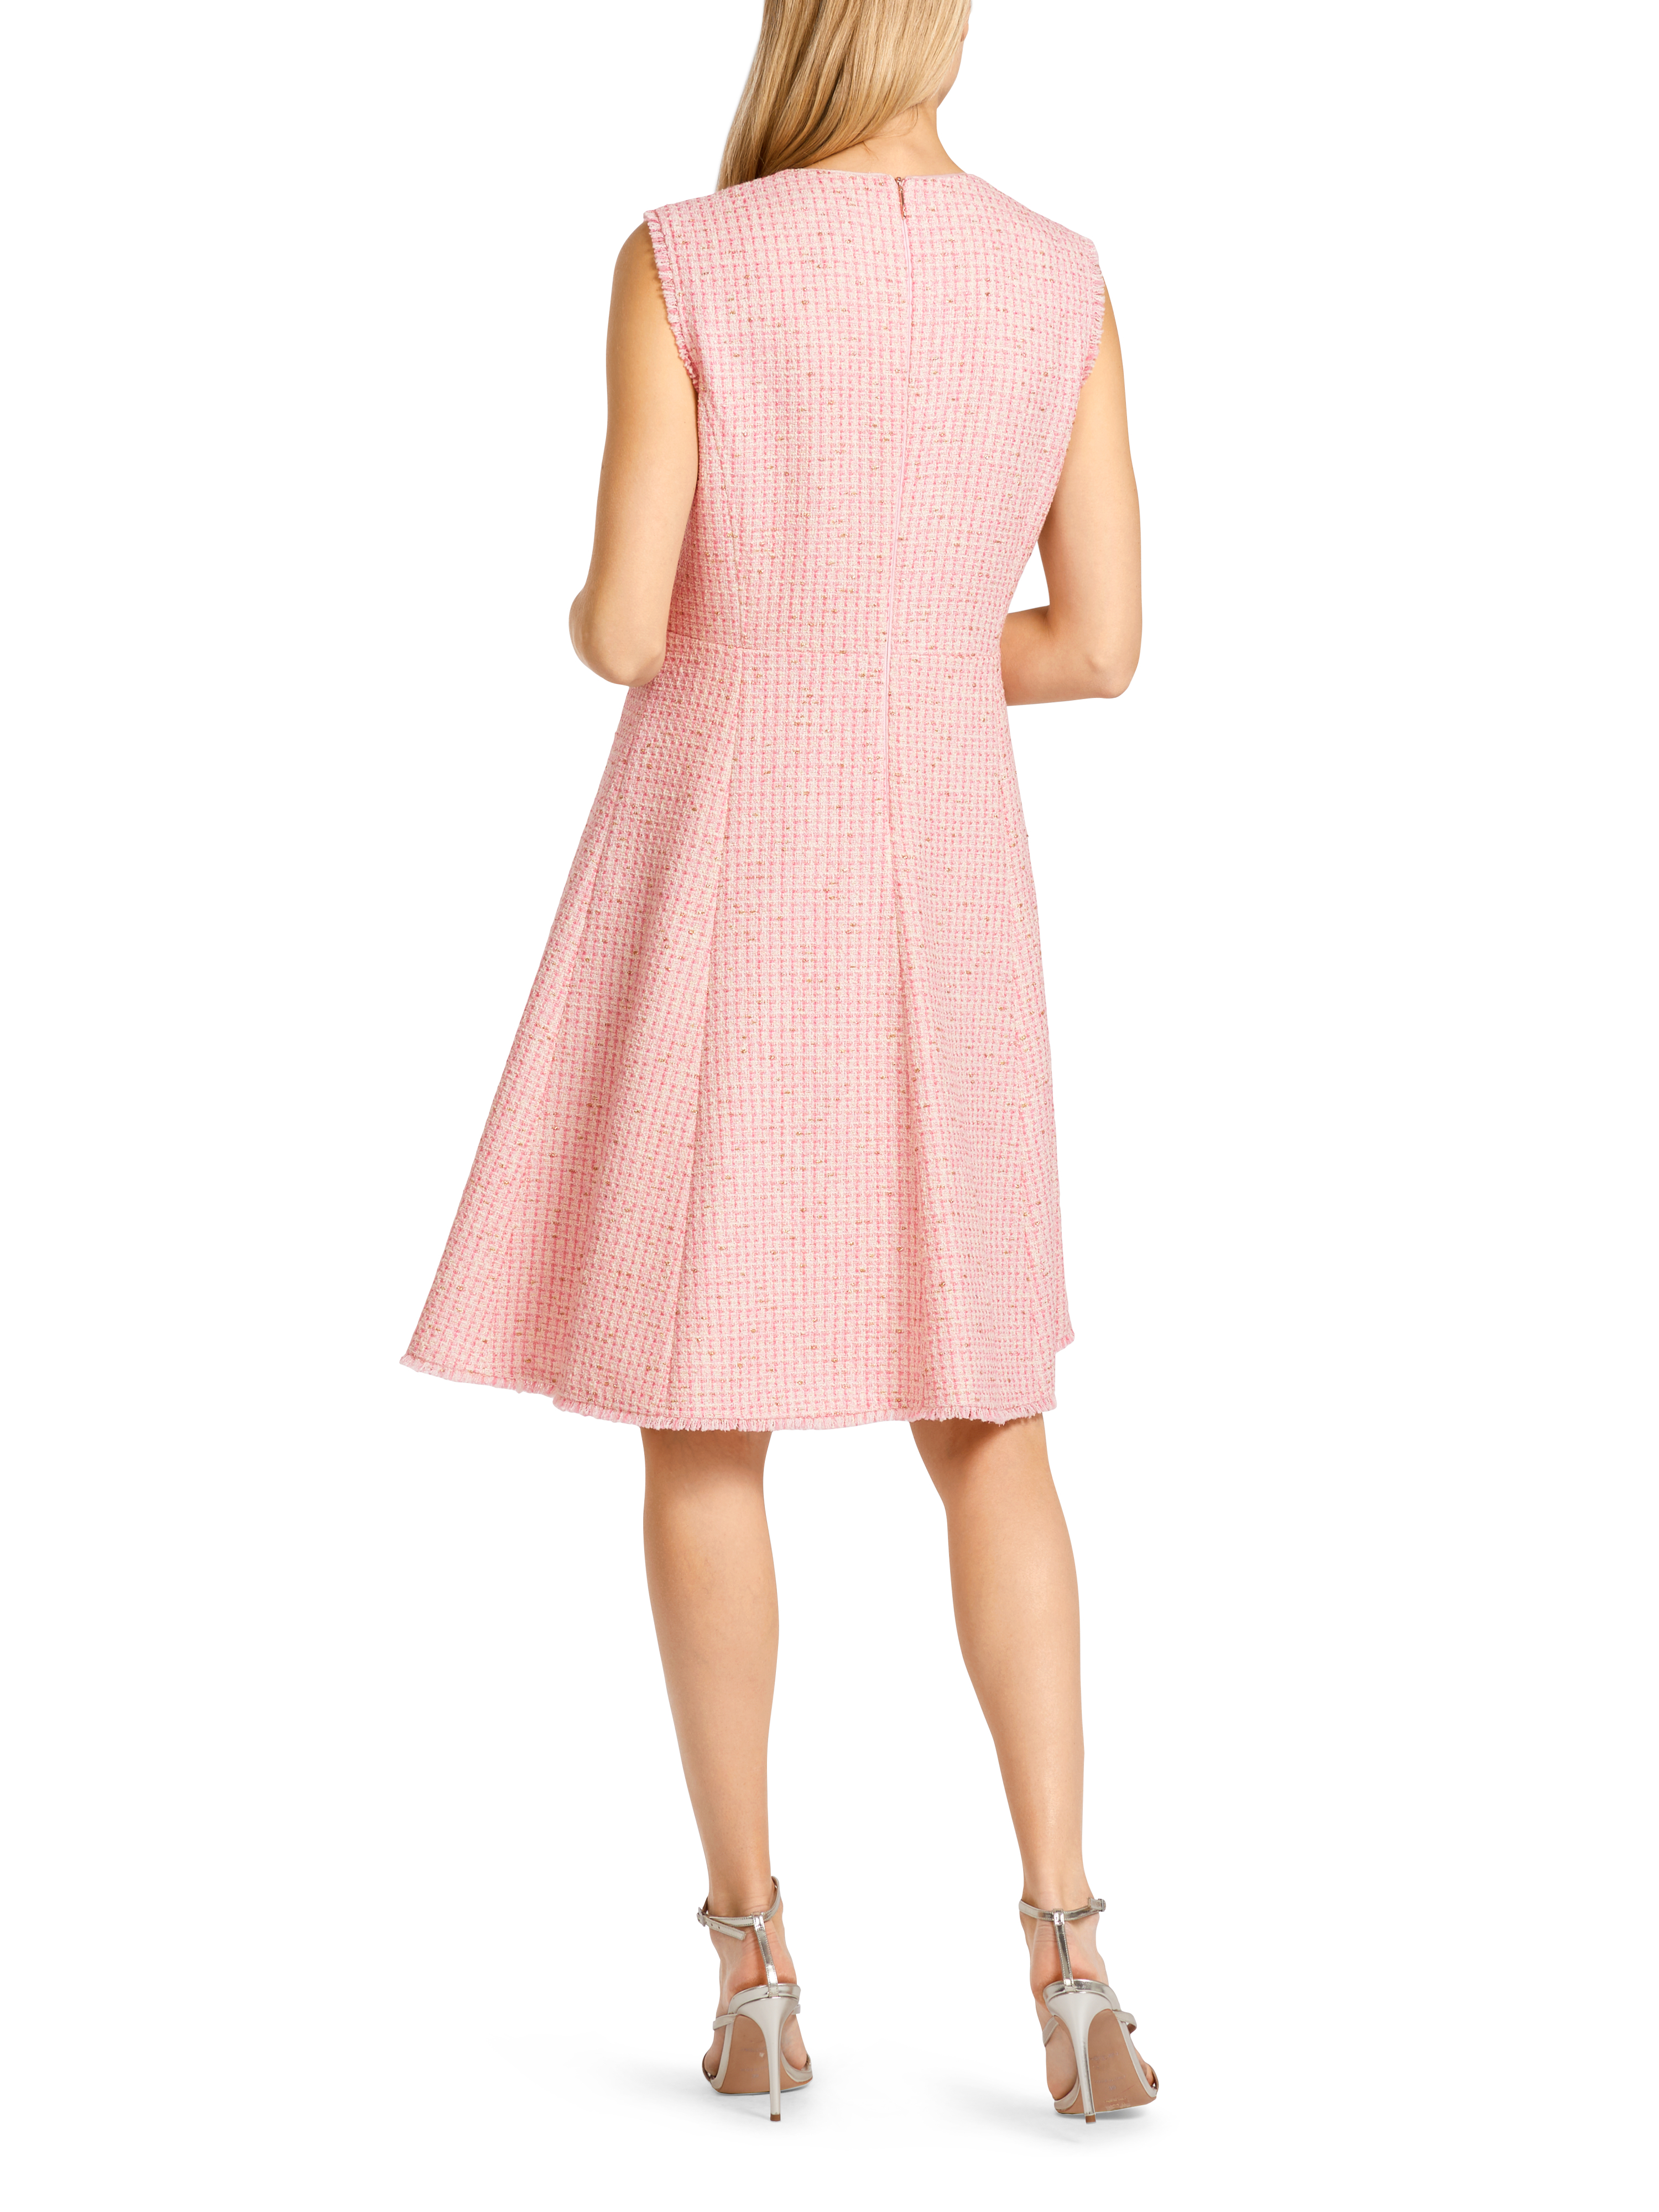 MARC CAIN UC 21.57 W07  Ärmelloses Kleid mit Bahnenrock soft pink